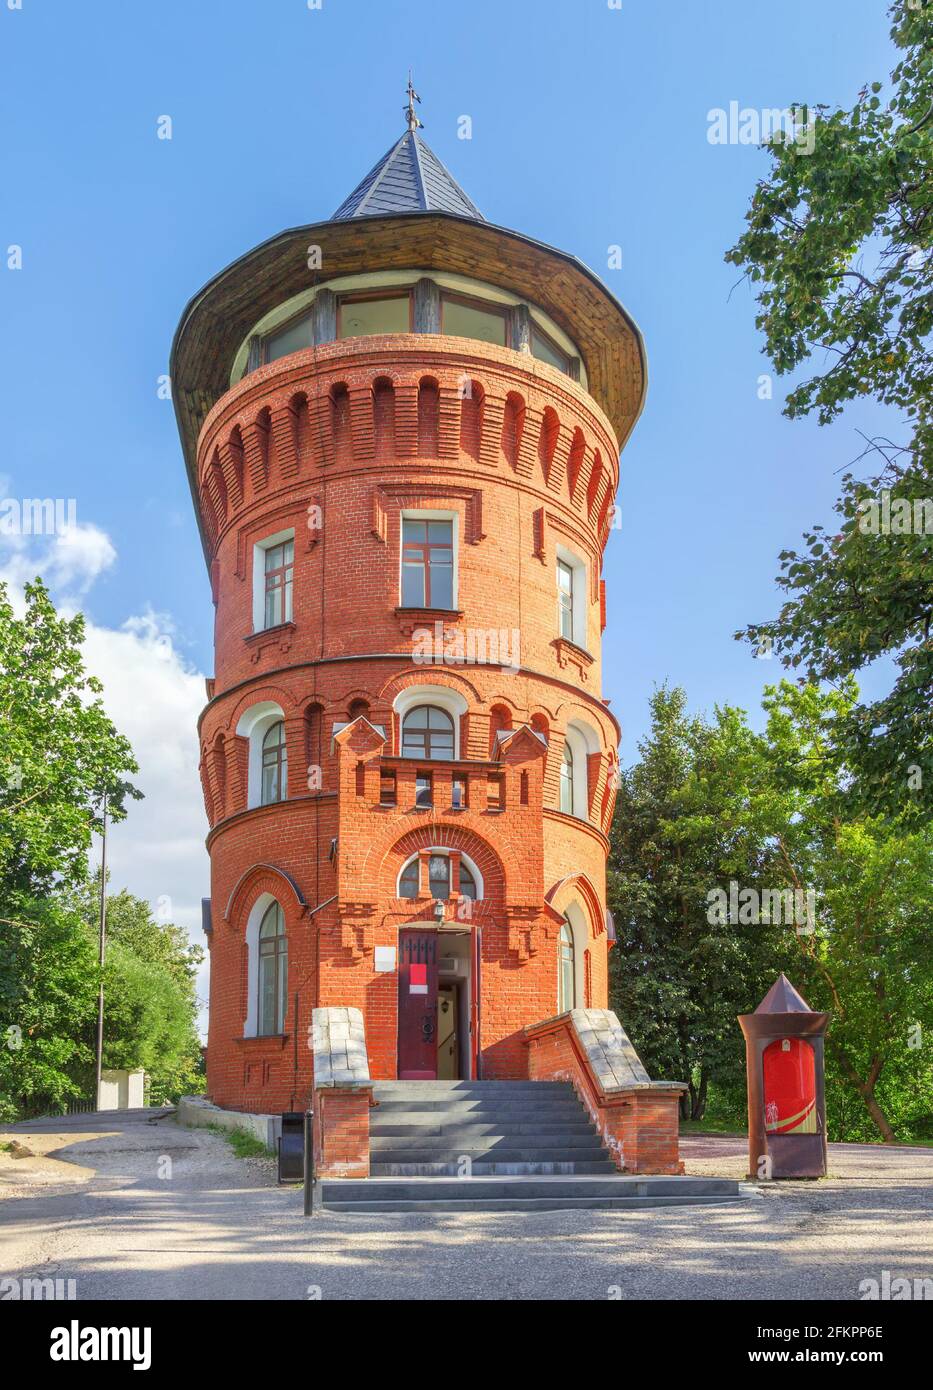 Water Tower or Vodonapornaya Bashnya. The building was built in 1912. Vladimir, Russia. Stock Photo